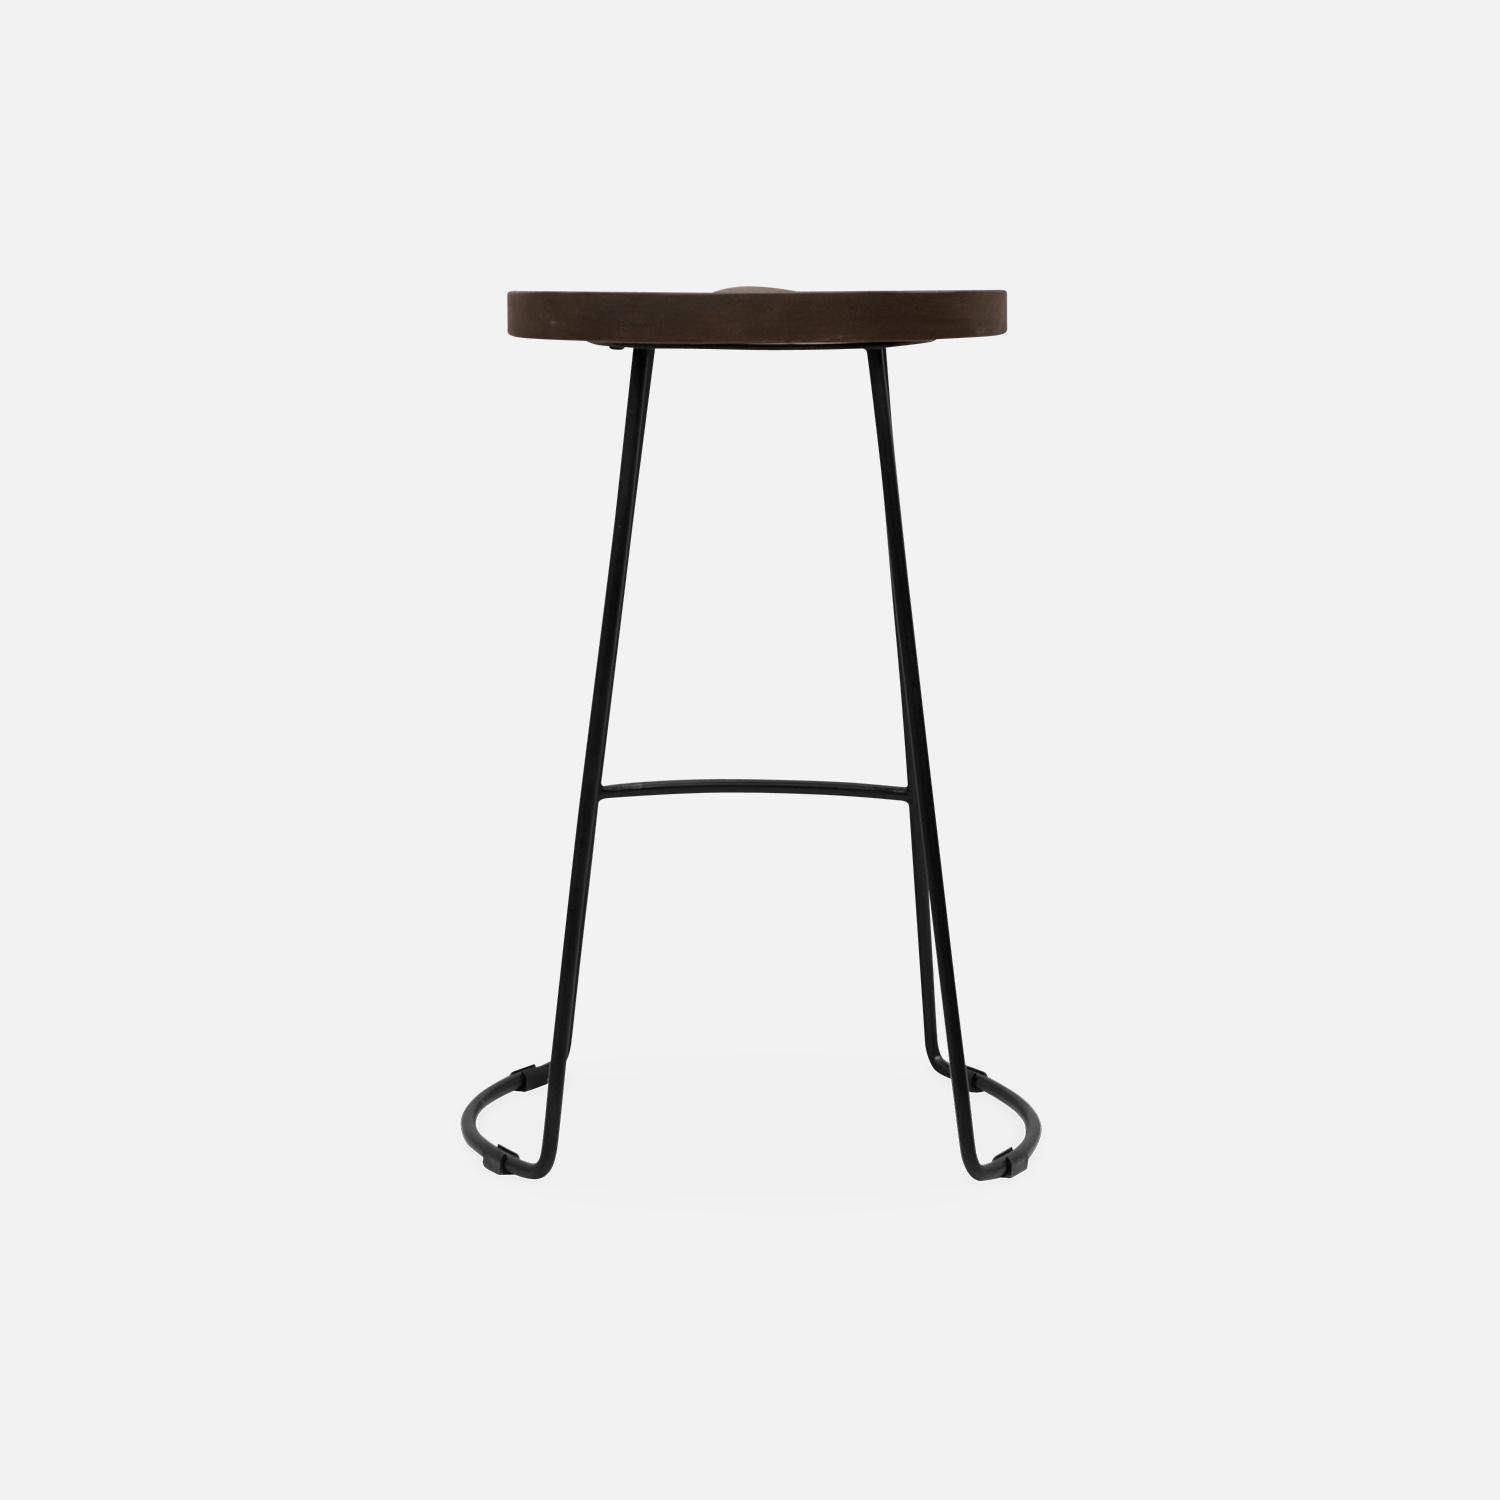 Set of 4 industrial metal and wooden bar stools, 44x36x65cm, Jaya, Light Walnut, Mango wood seat, black metal legs,sweeek,Photo7